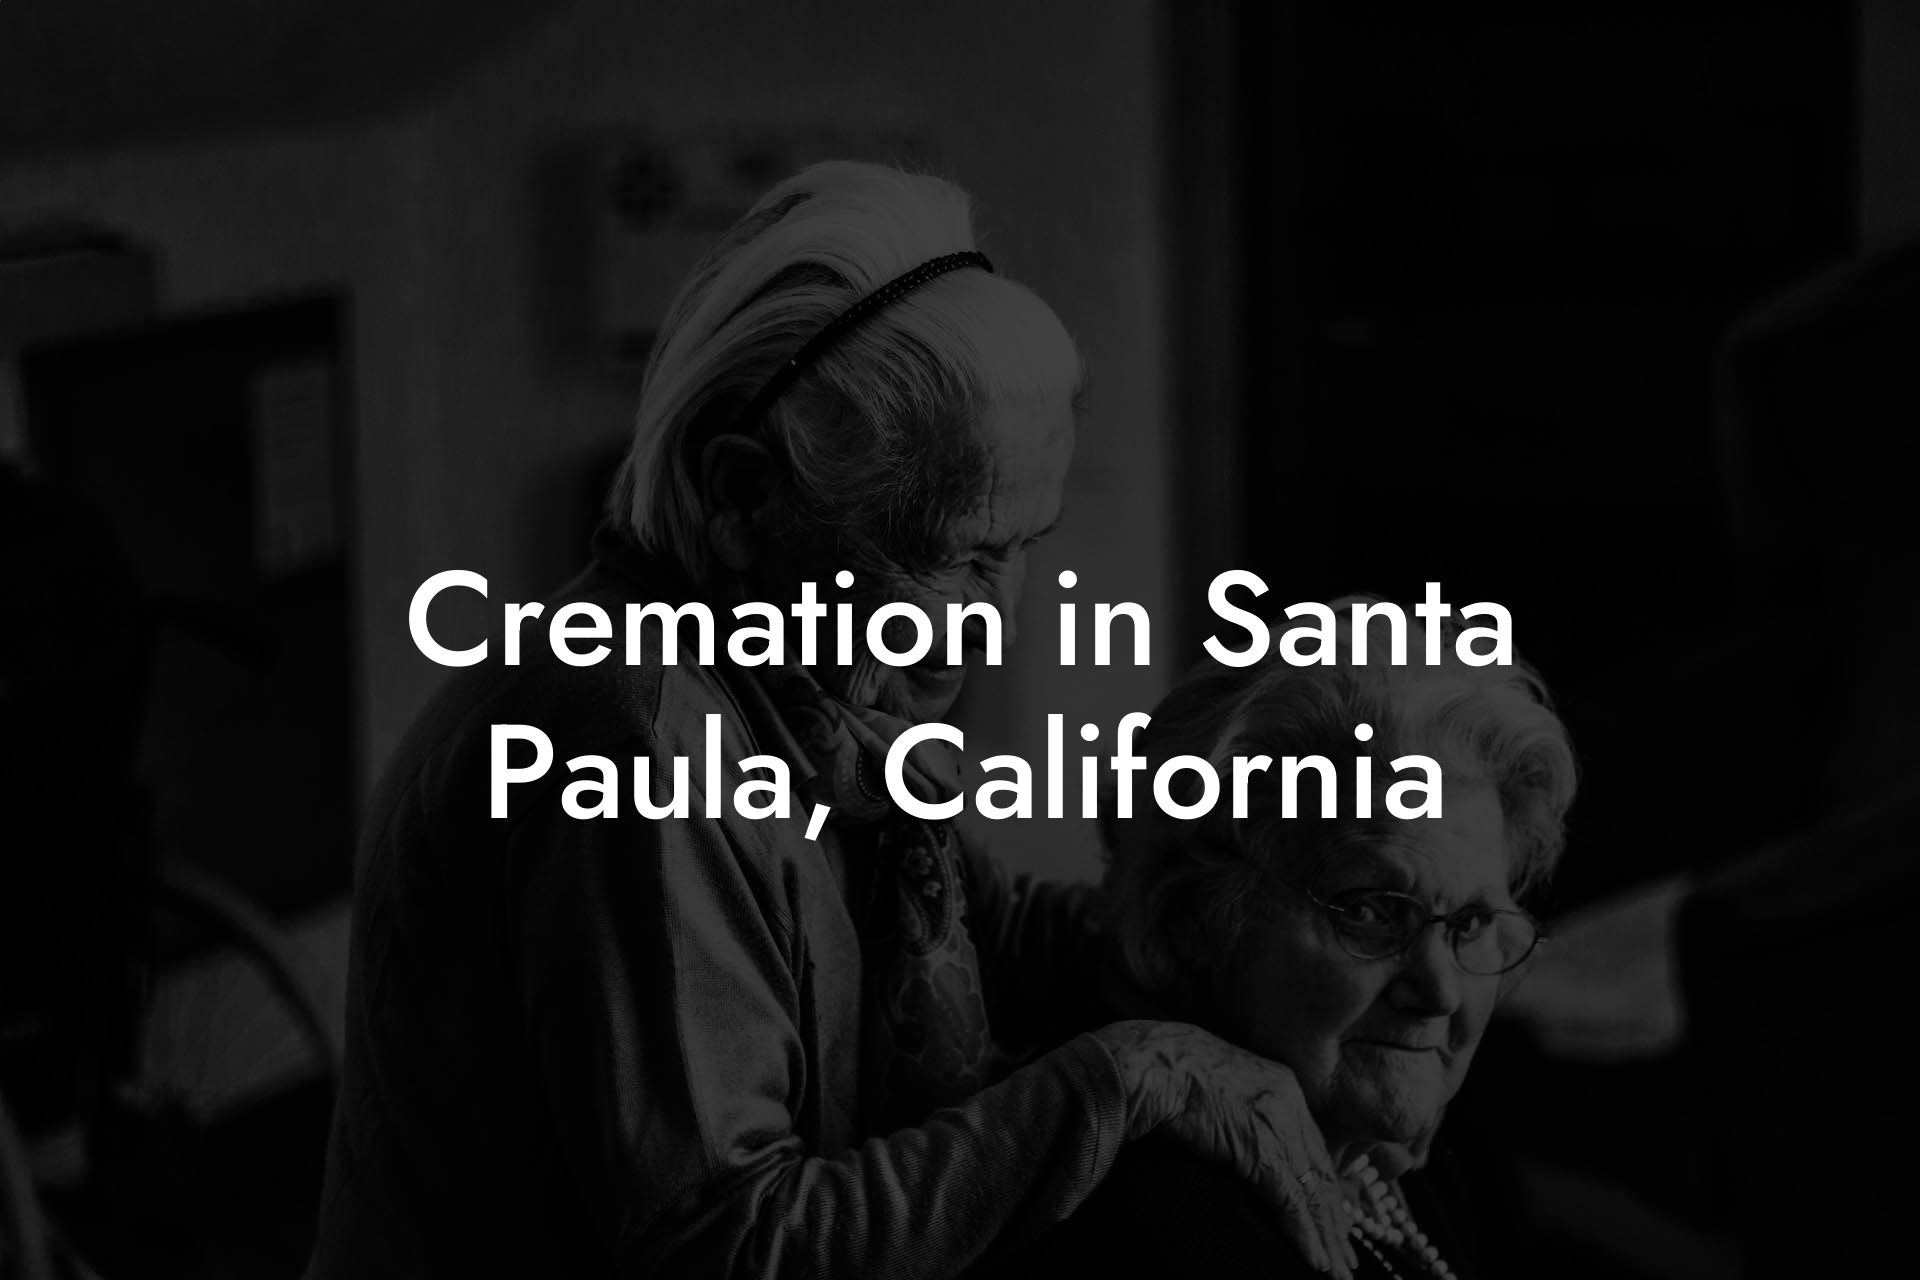 Cremation in Santa Paula, California